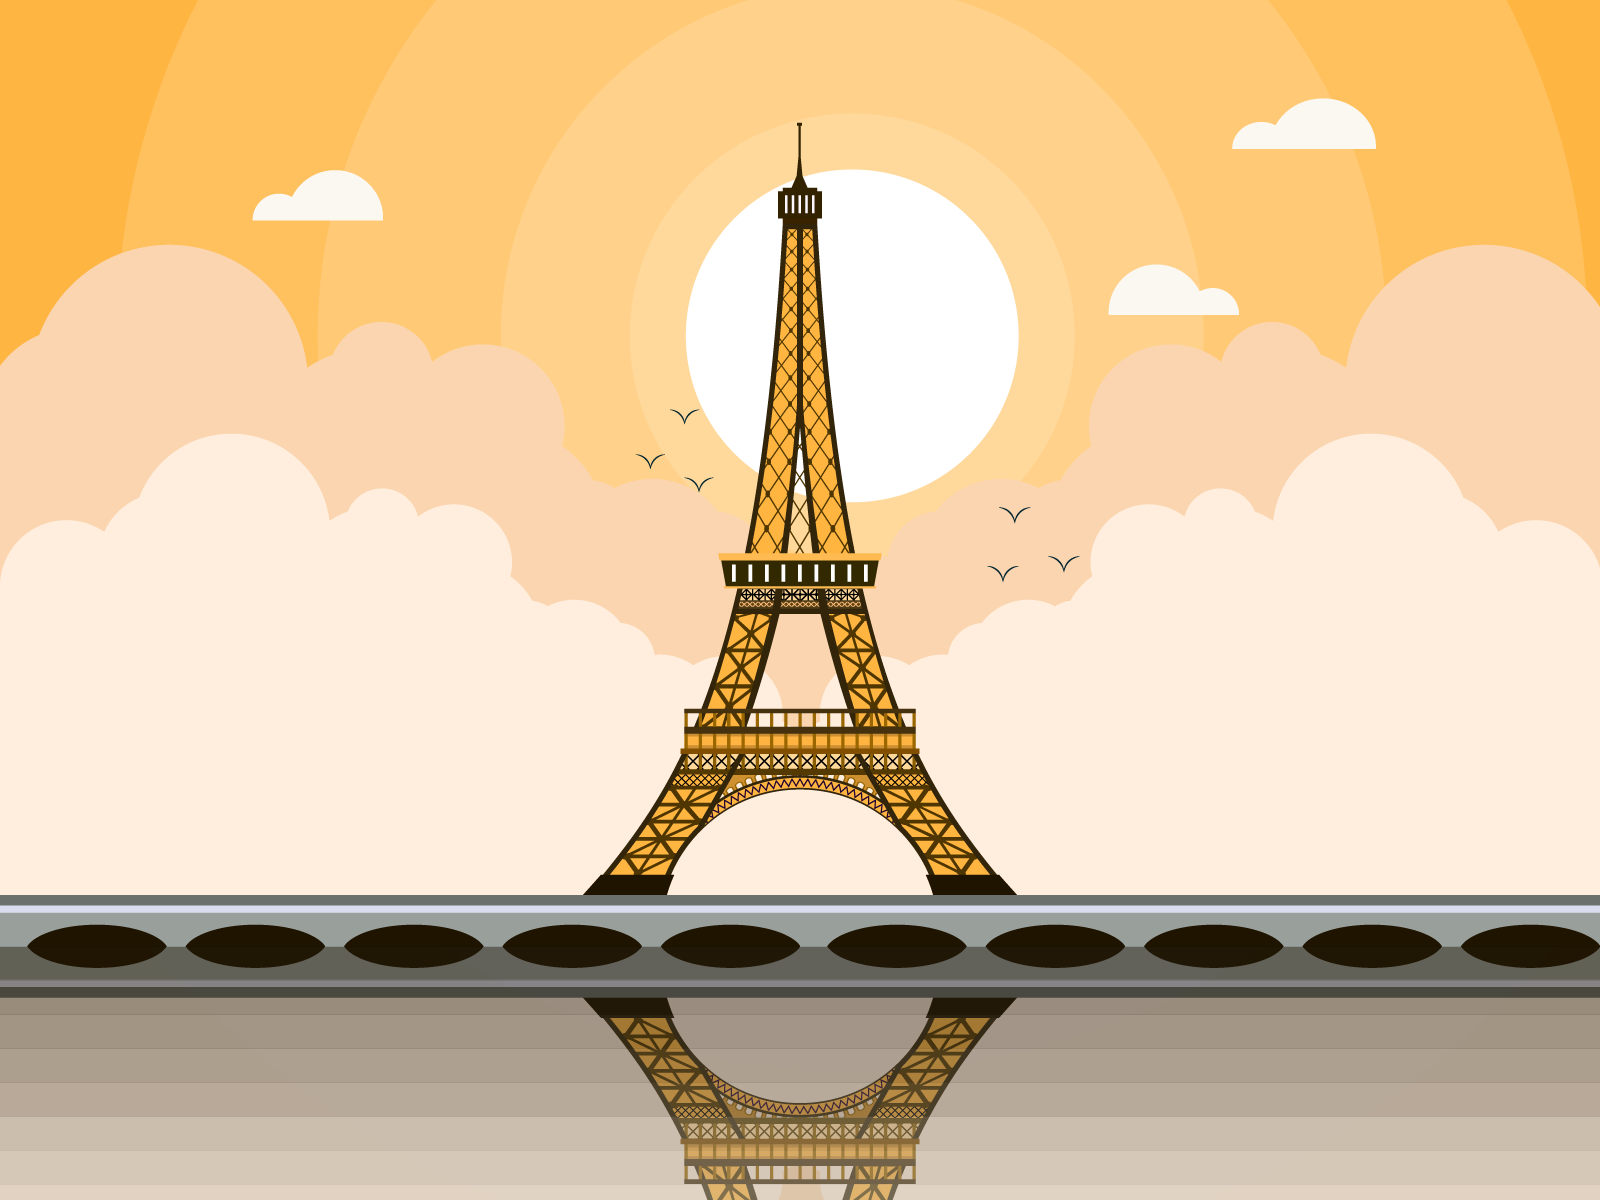 Eiffel Tower Day-Night View by Yudiz Solutions Pvt Ltd on Dribbble